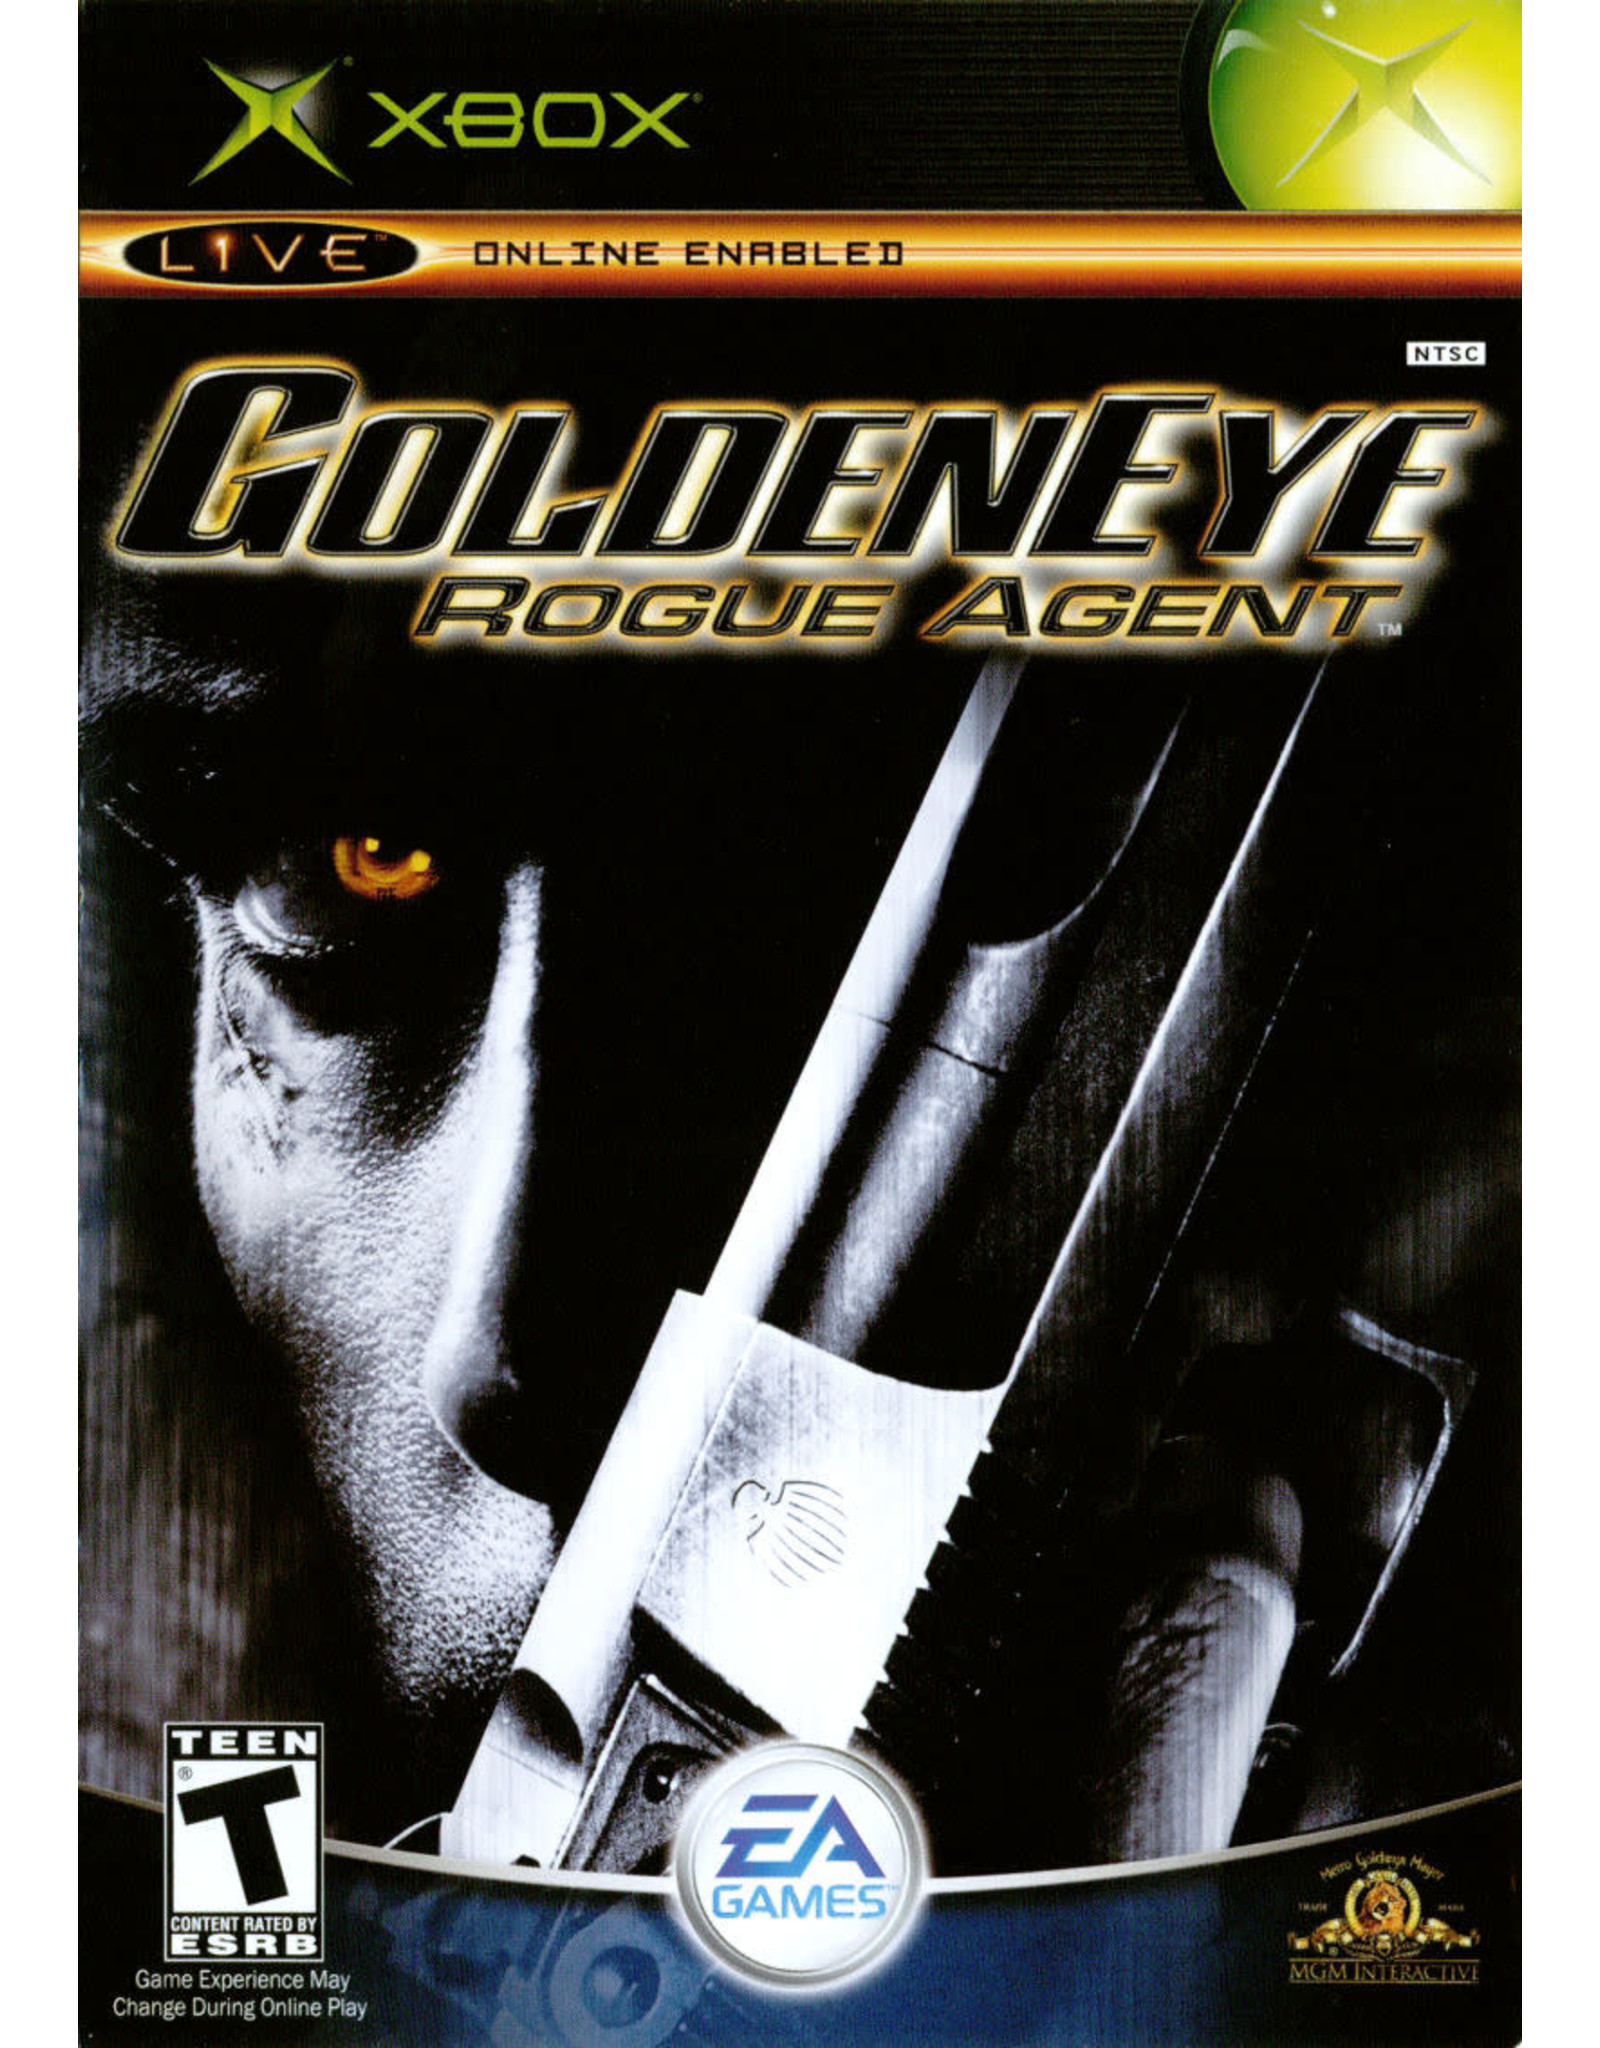 Xbox 007 GoldenEye Rogue Agent (CiB)